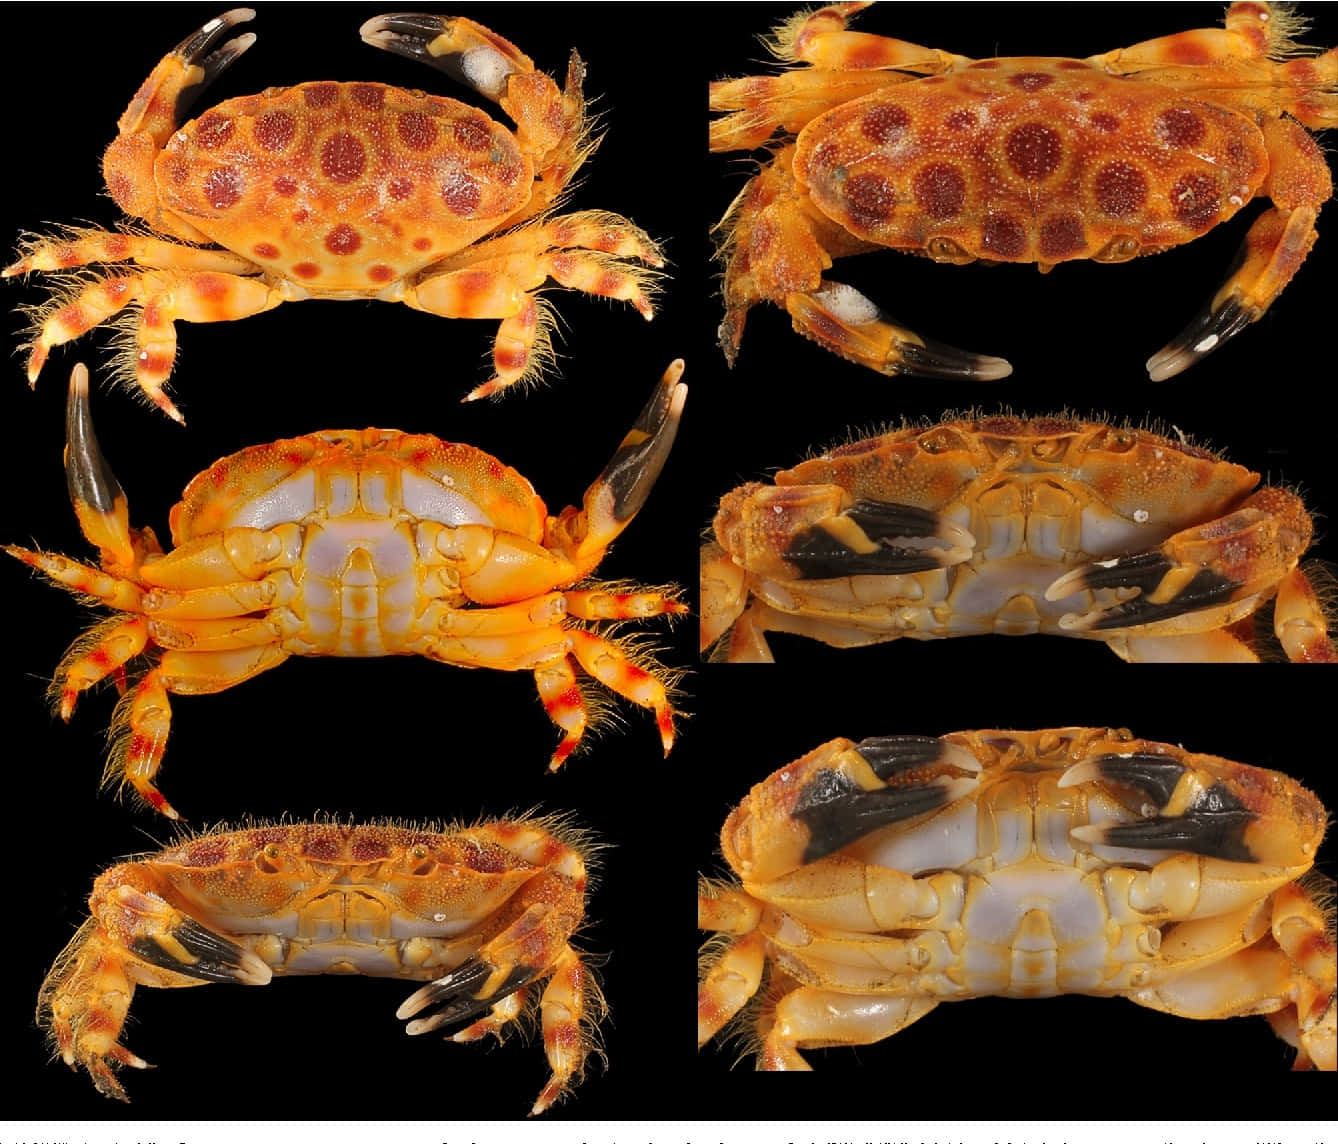 Xanthid Crab Multiple Views Wallpaper